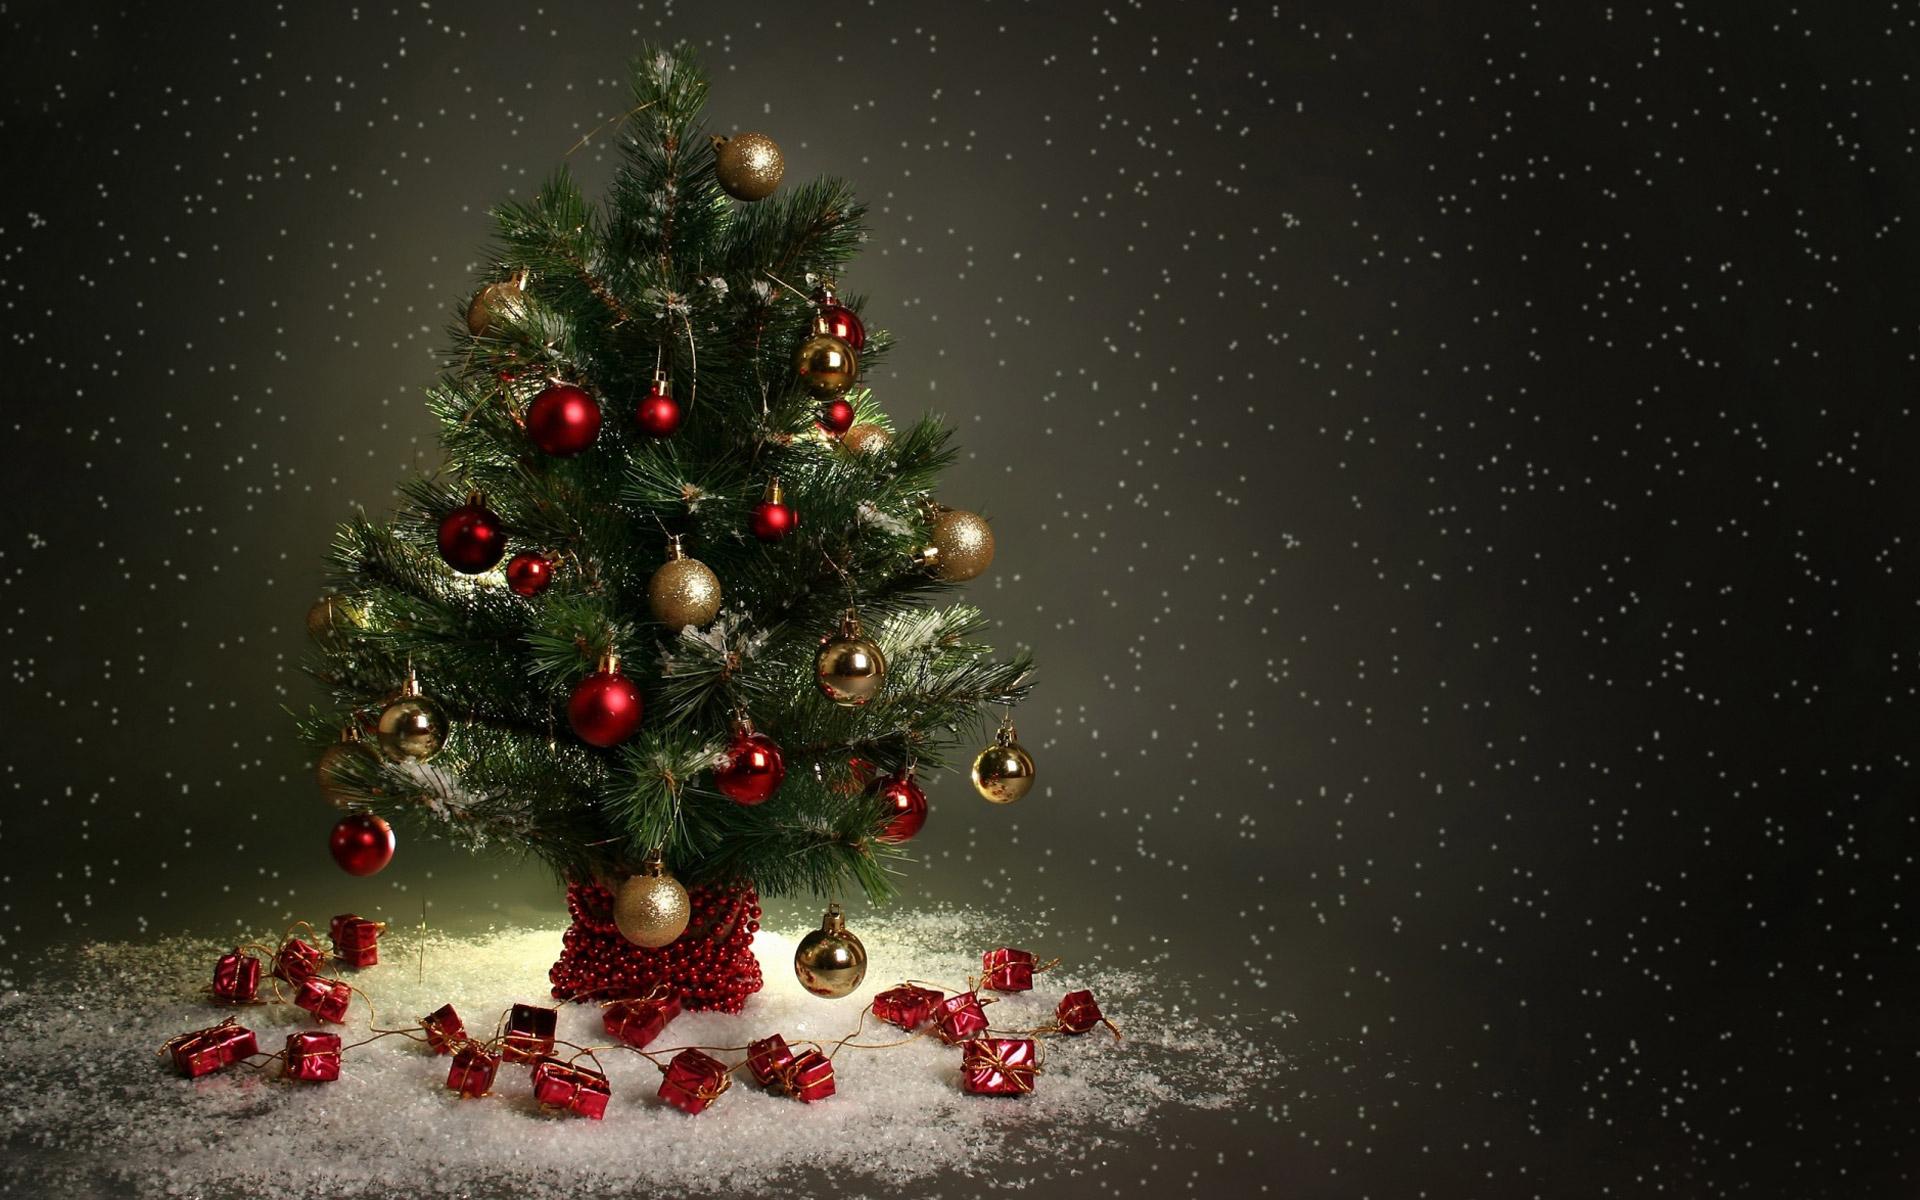 Merry Christmas HD Wallpaper, Image & Greetings Free